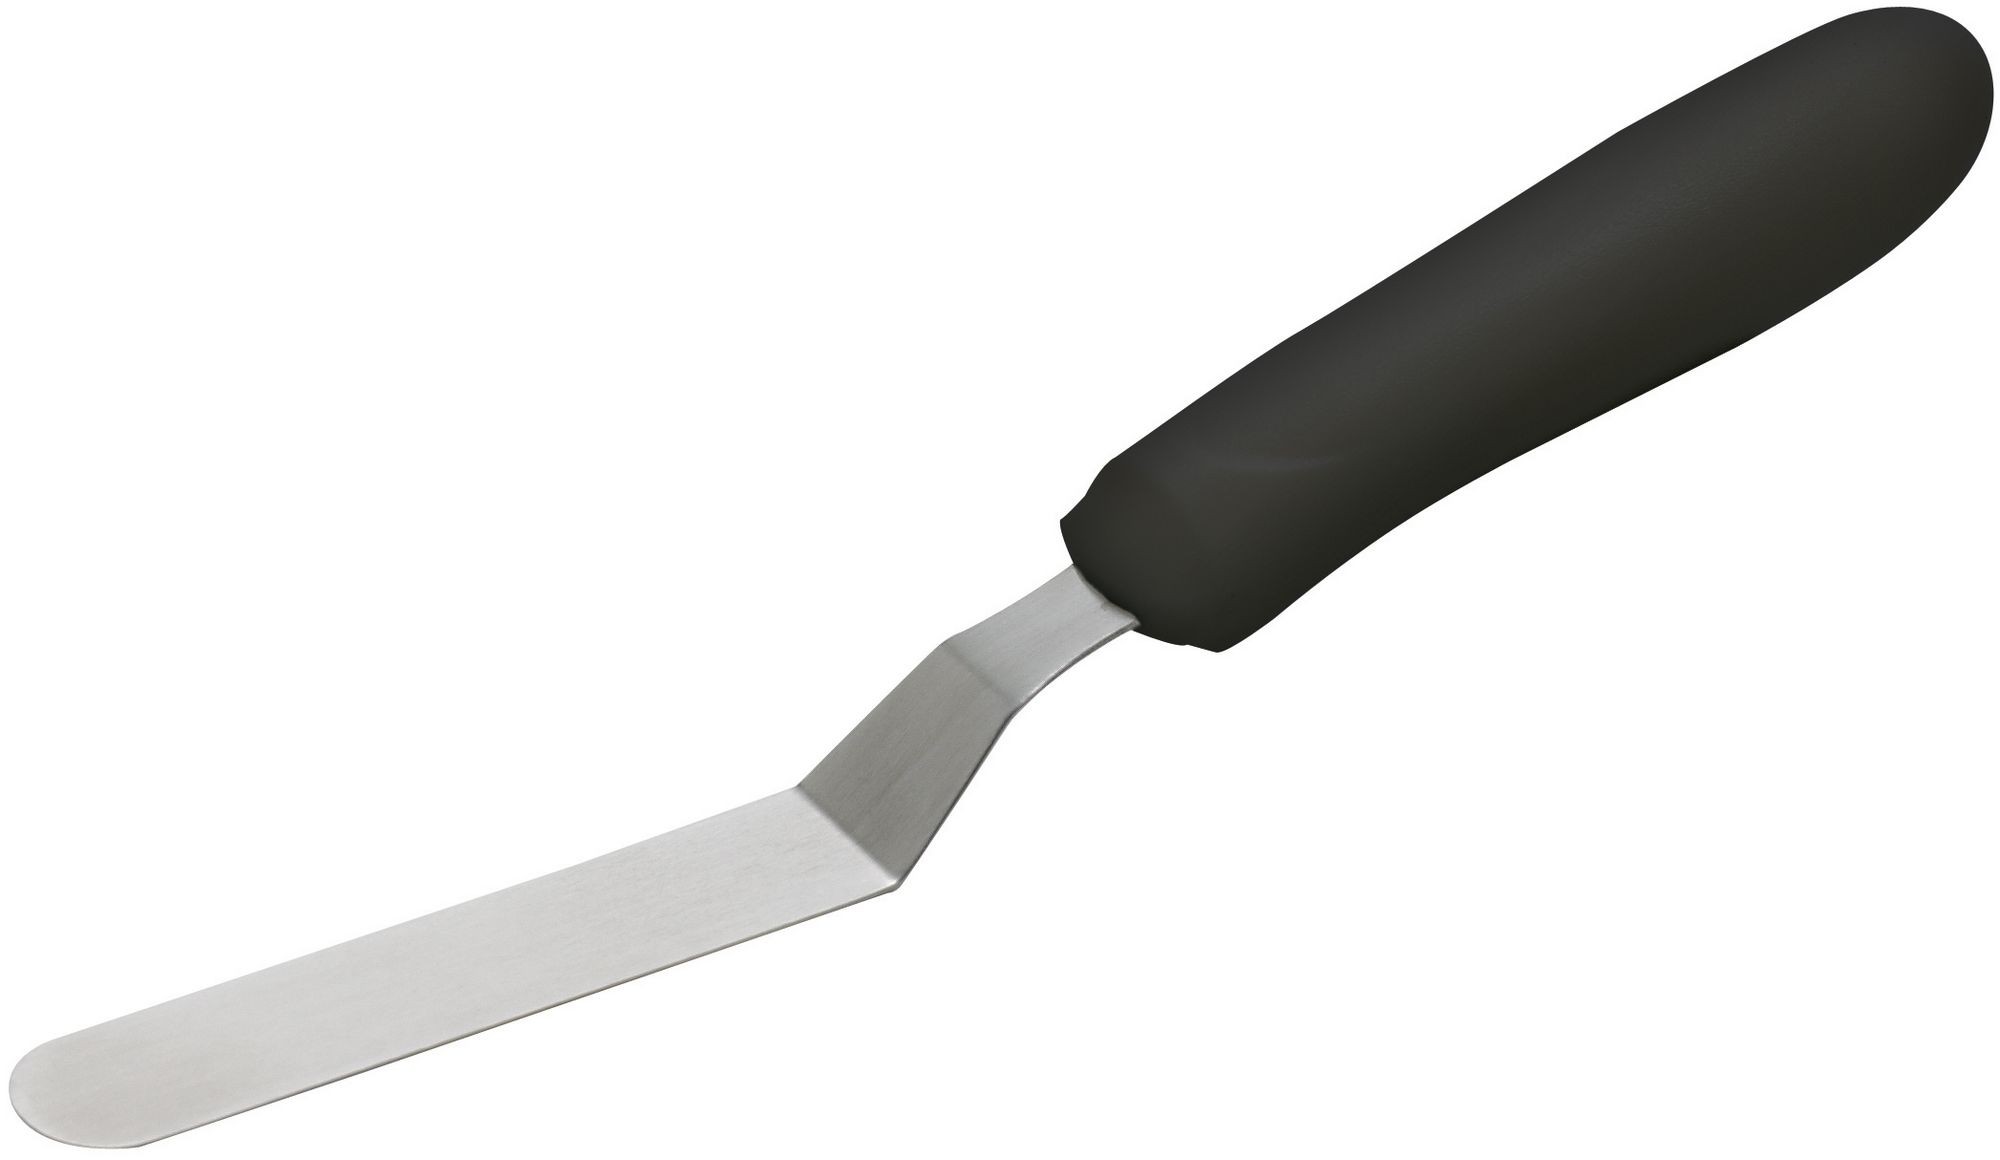 Winco TKPO-4 Offset Spatula 4-1/4" Blade, Black Polypropylene Handle